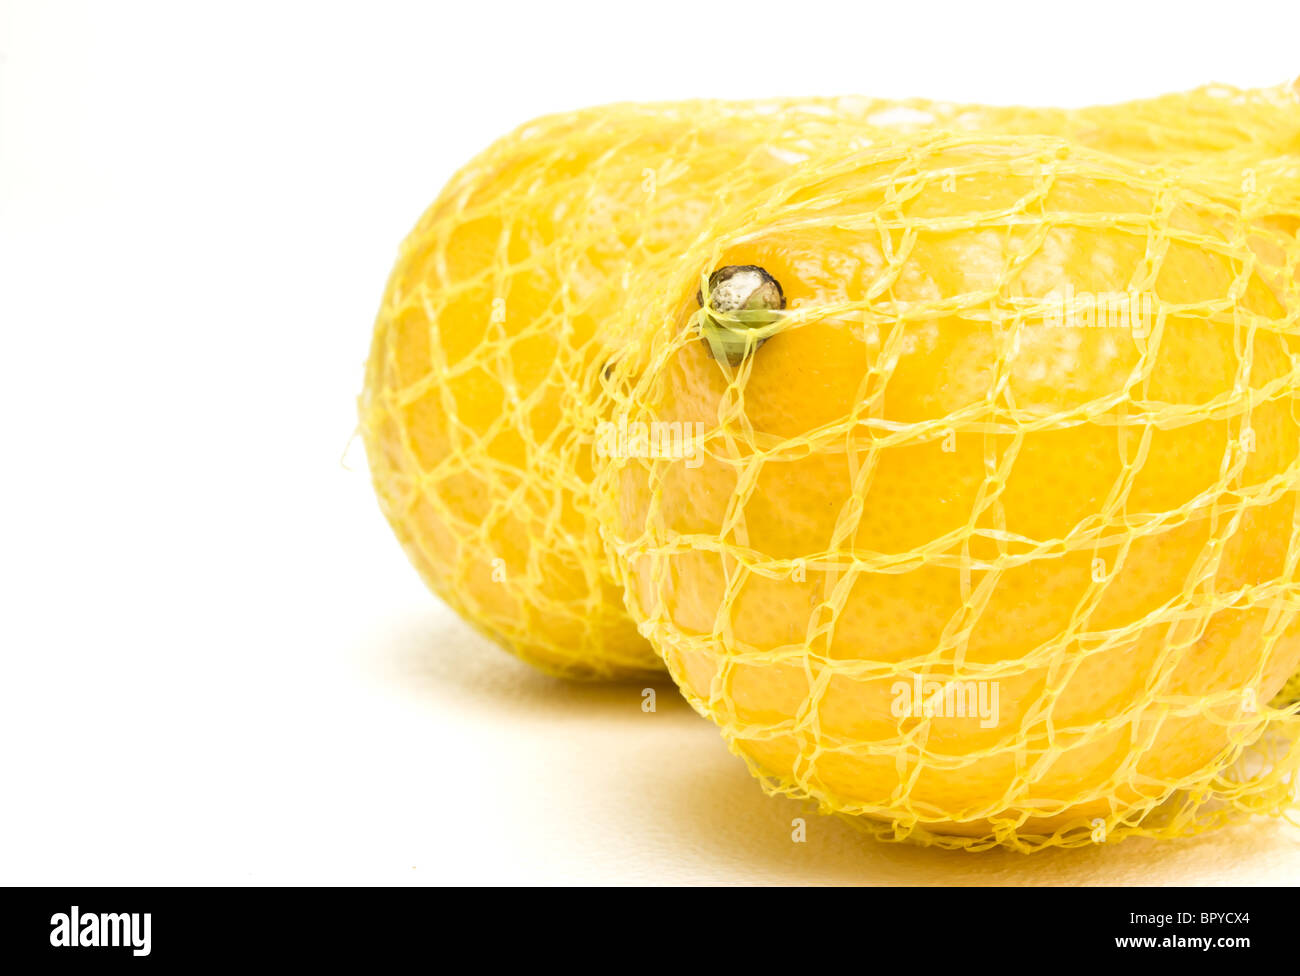 Lemon in a mesh bag. Stock Photo by Maliflower73